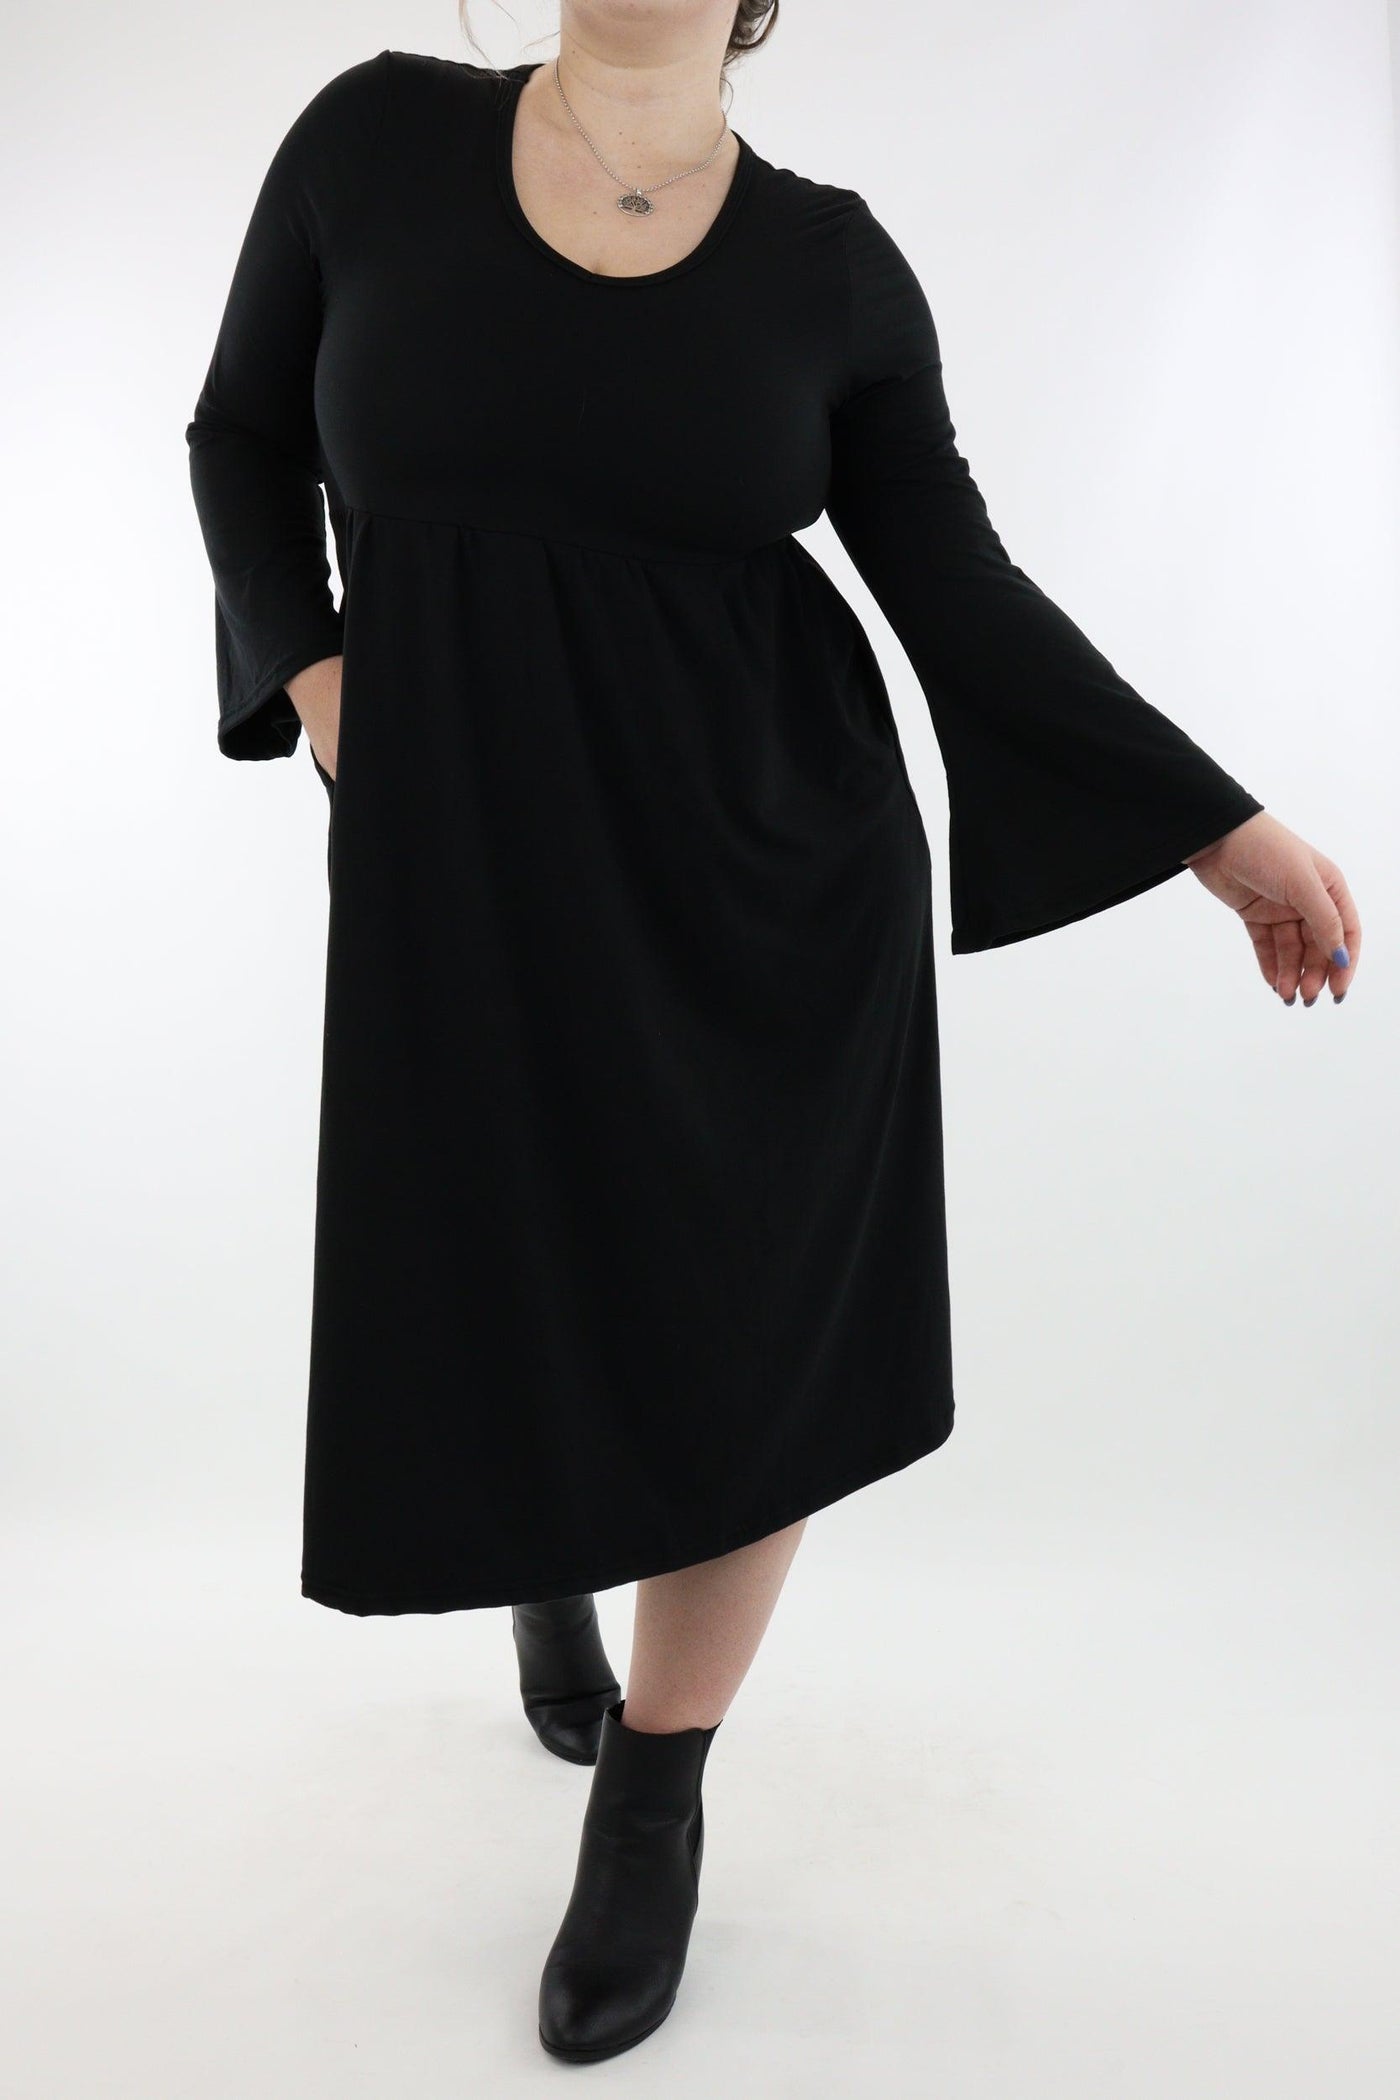 Black - Midi Length Dress - Bell Sleeve - Pockets - Pawlie